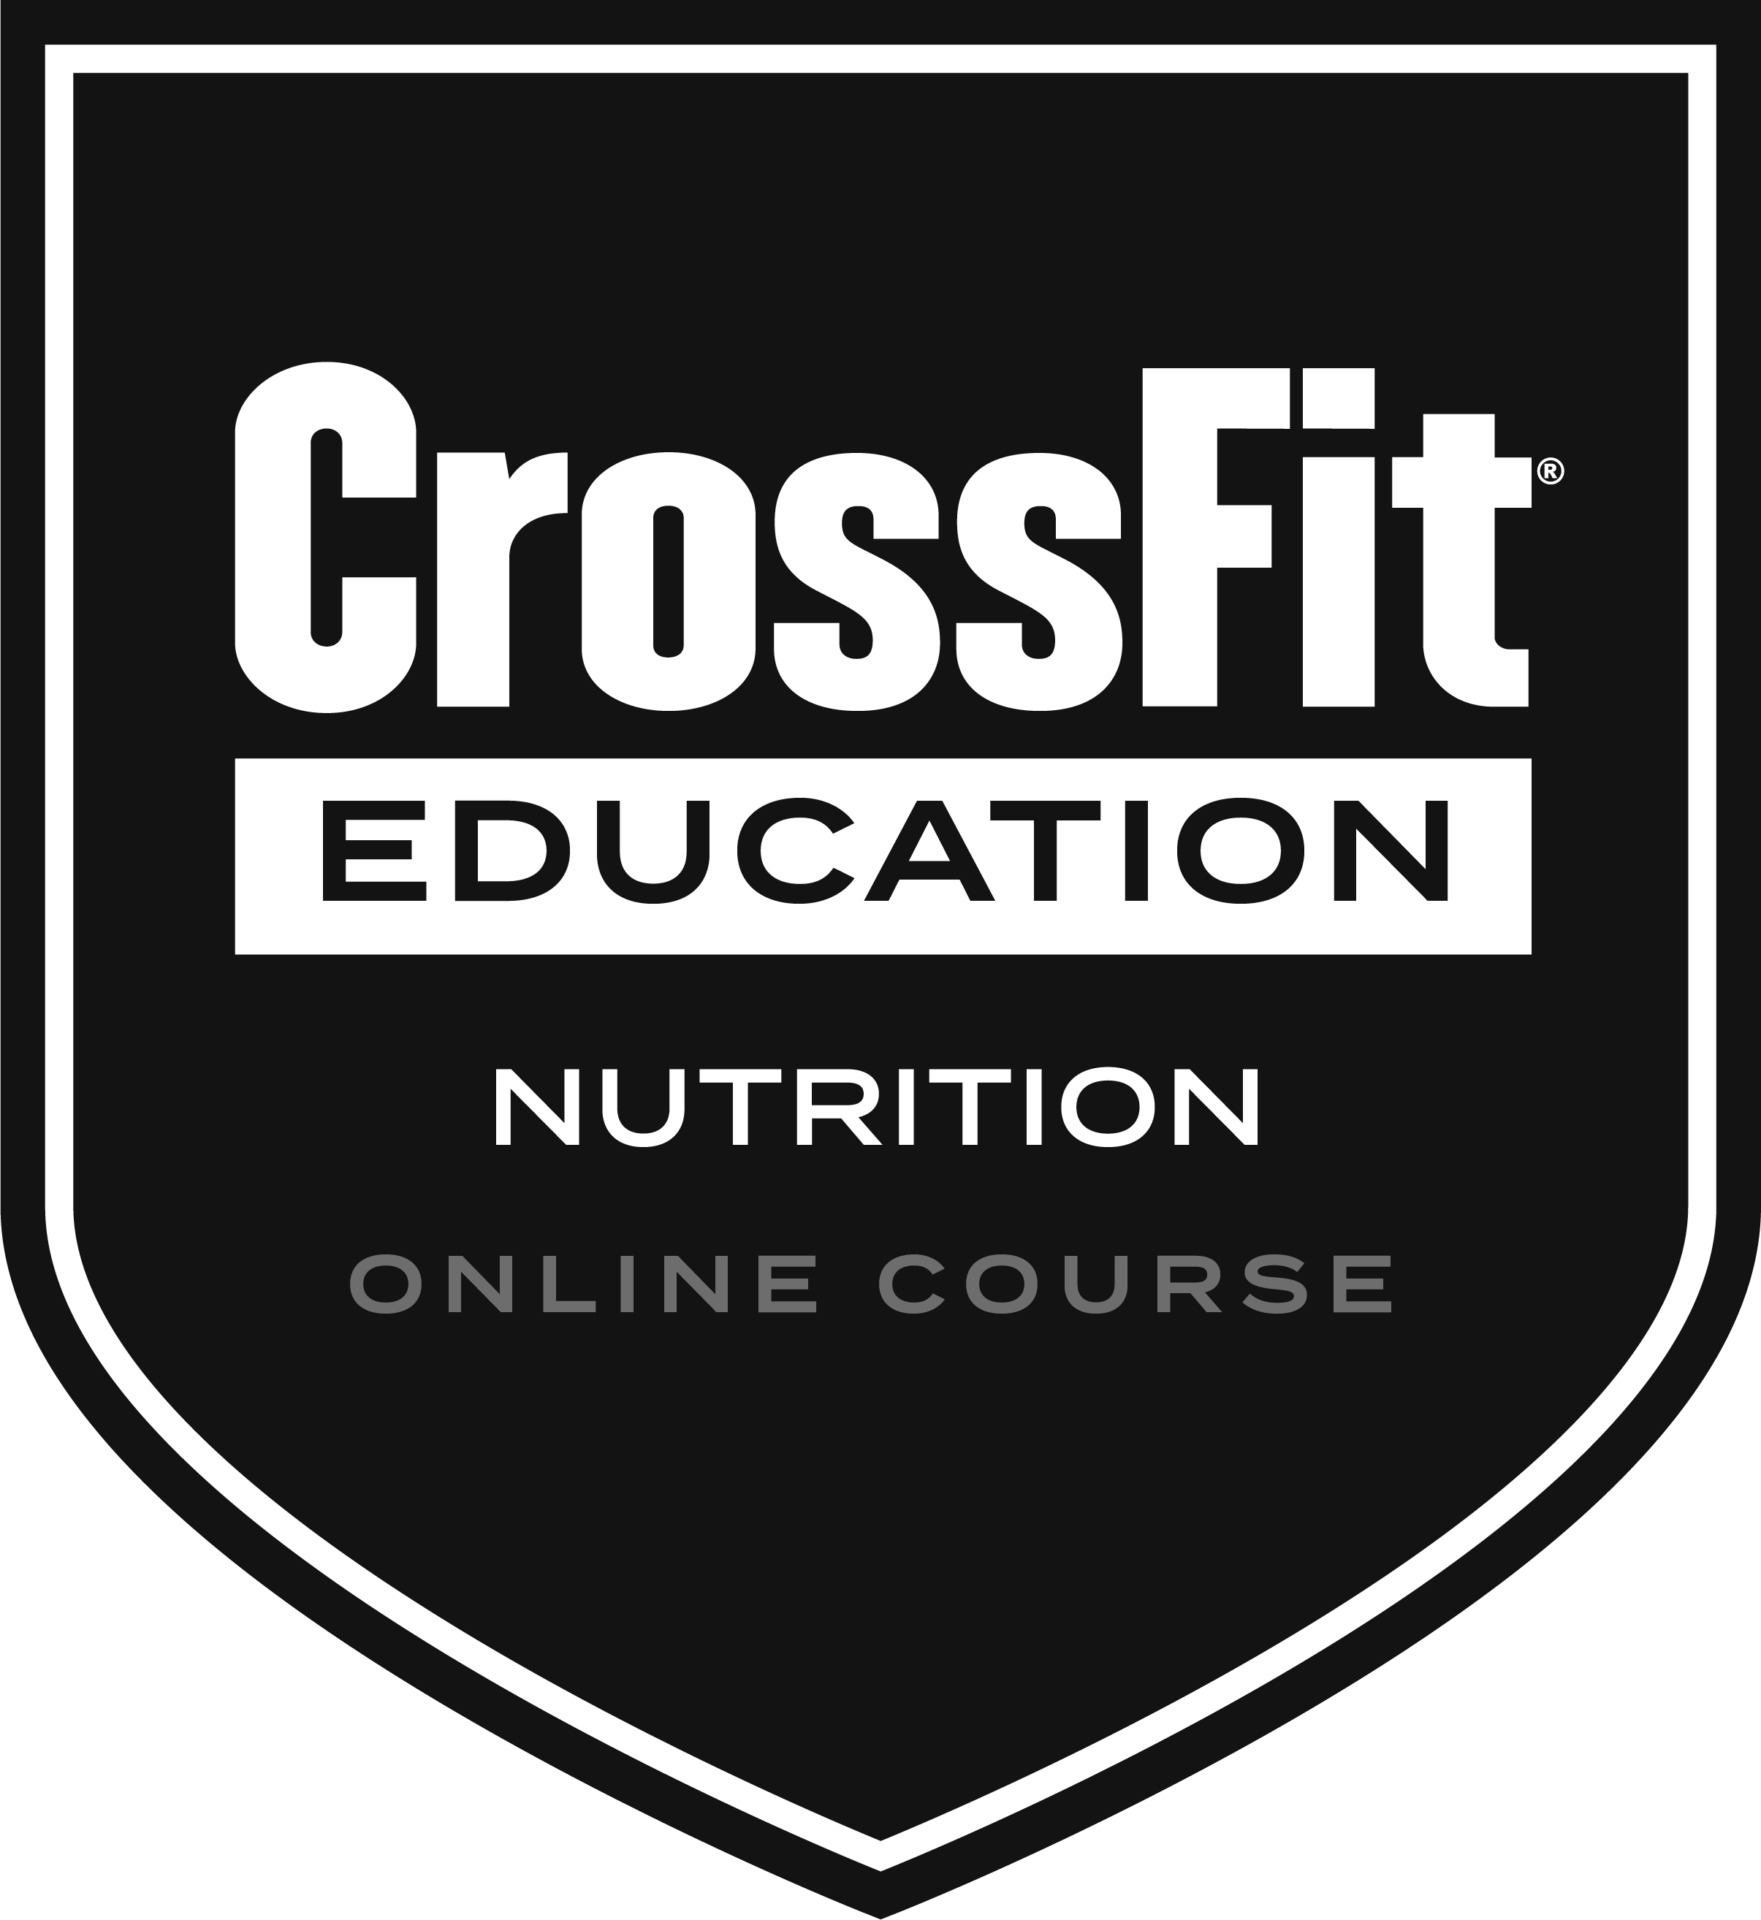 Crossfit Education Nutrition Online Course